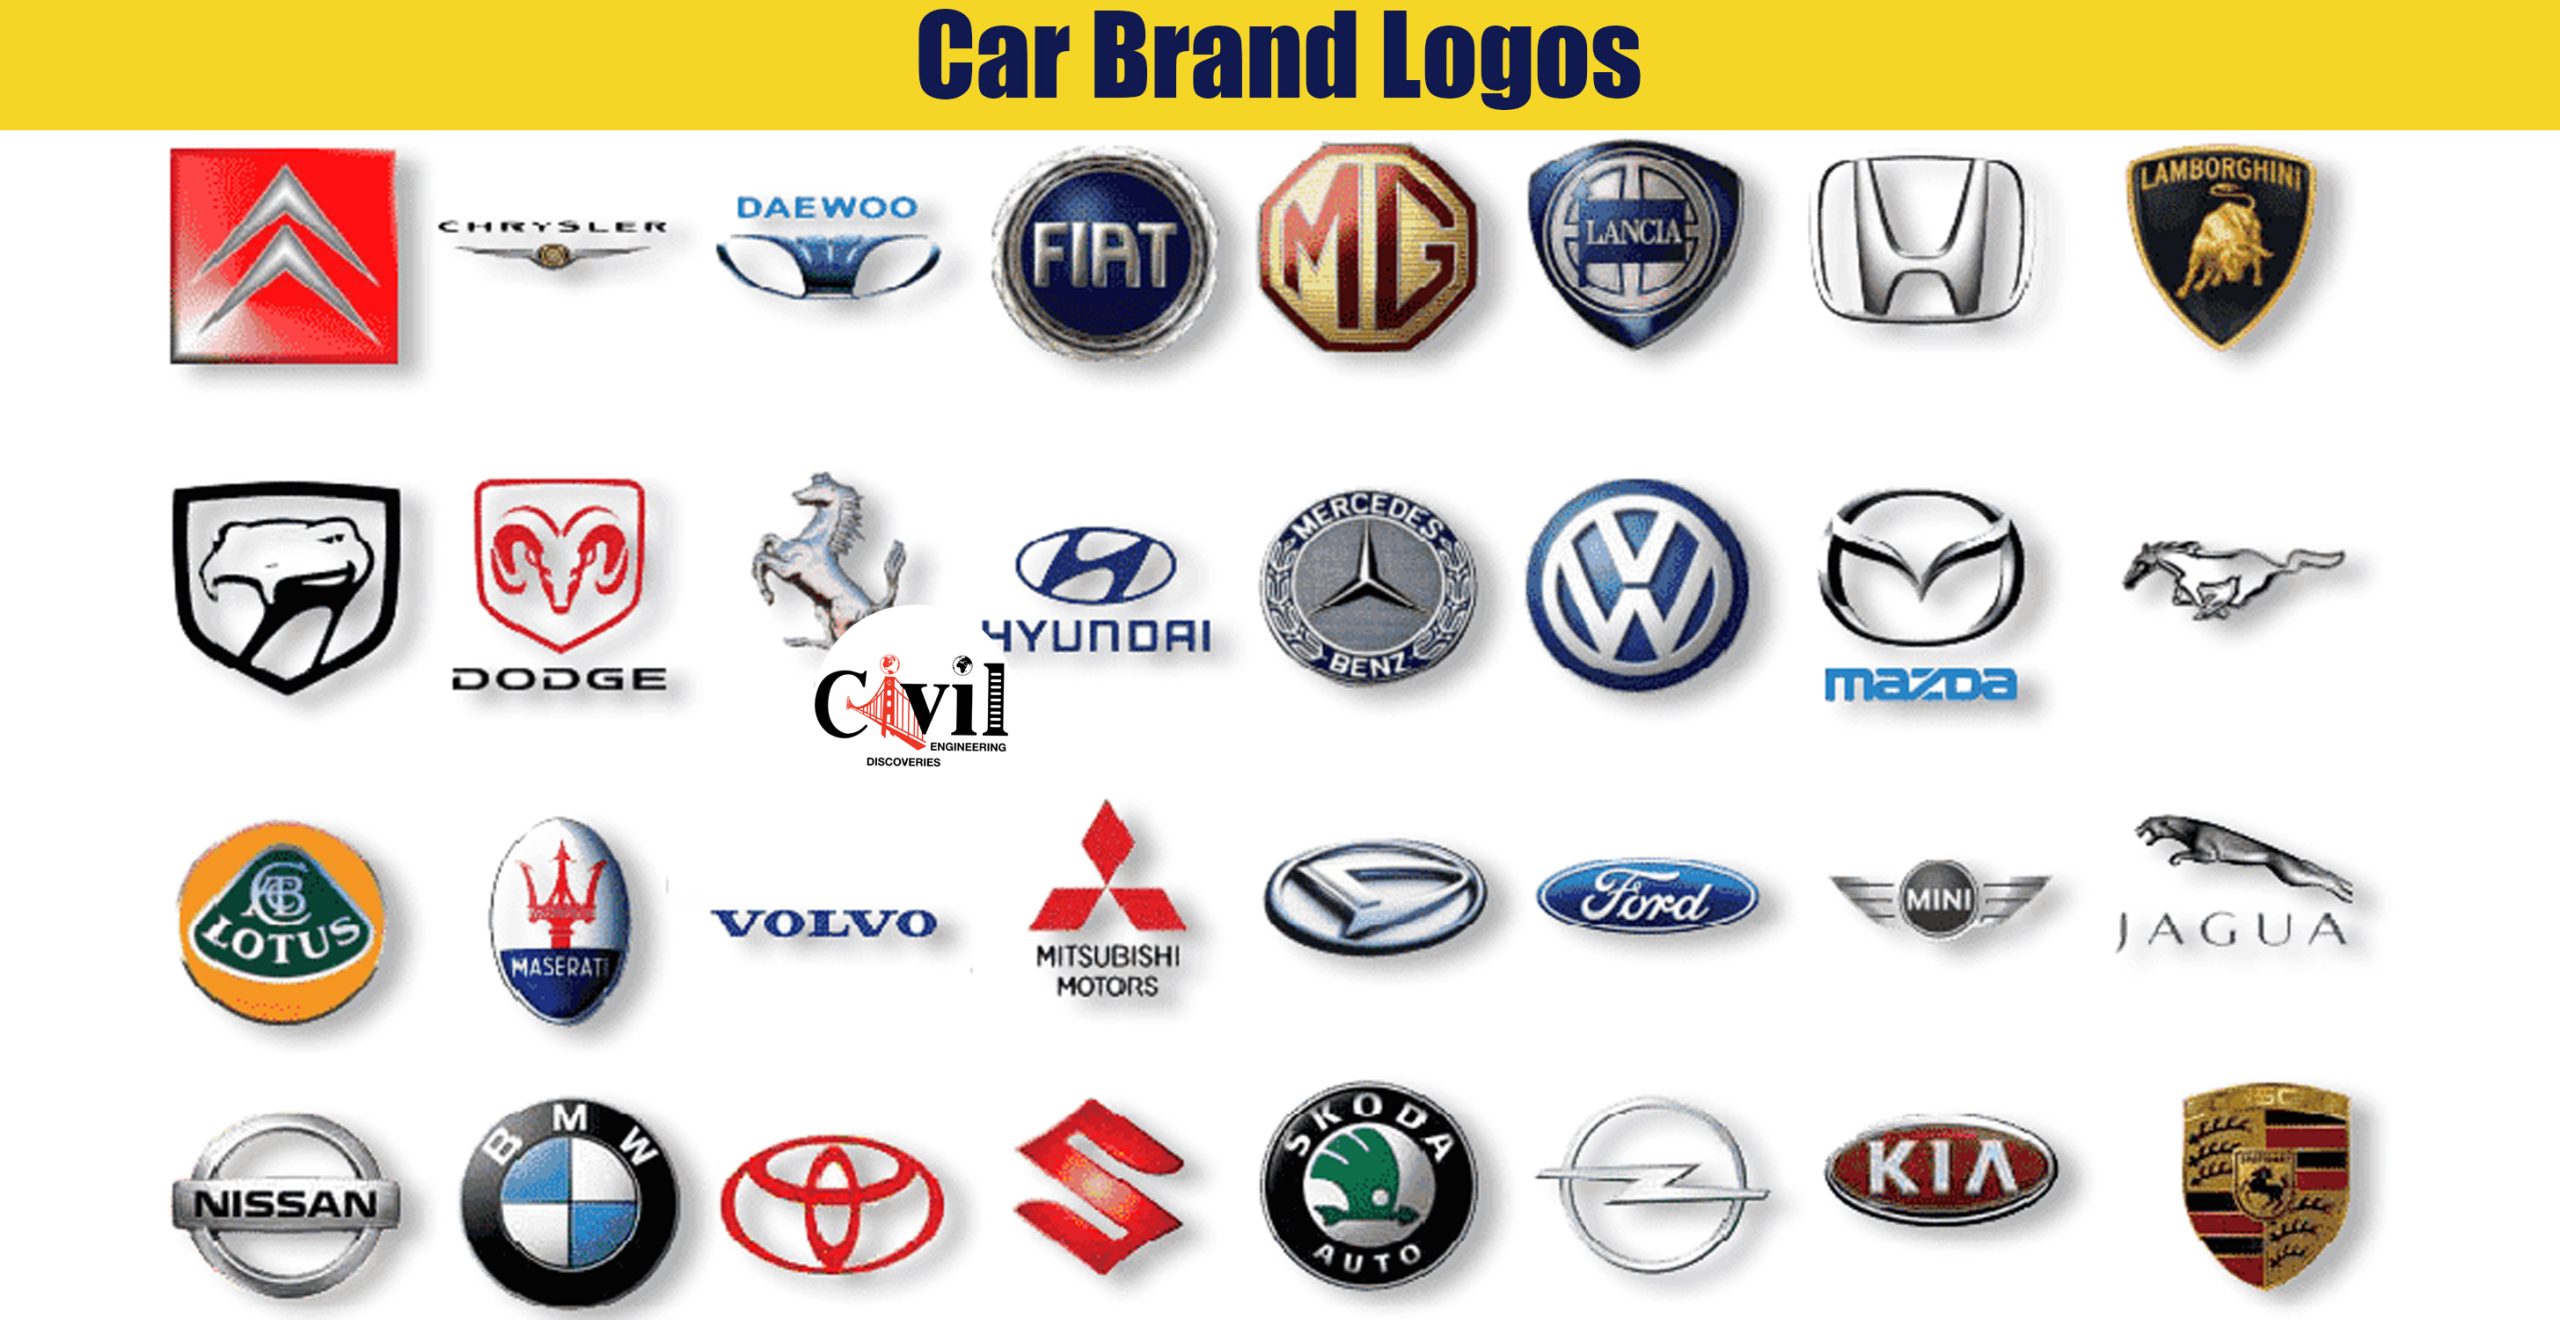 Car Brands Logos Names Weird Pinterest Car Brands Logos - Bank2home.com